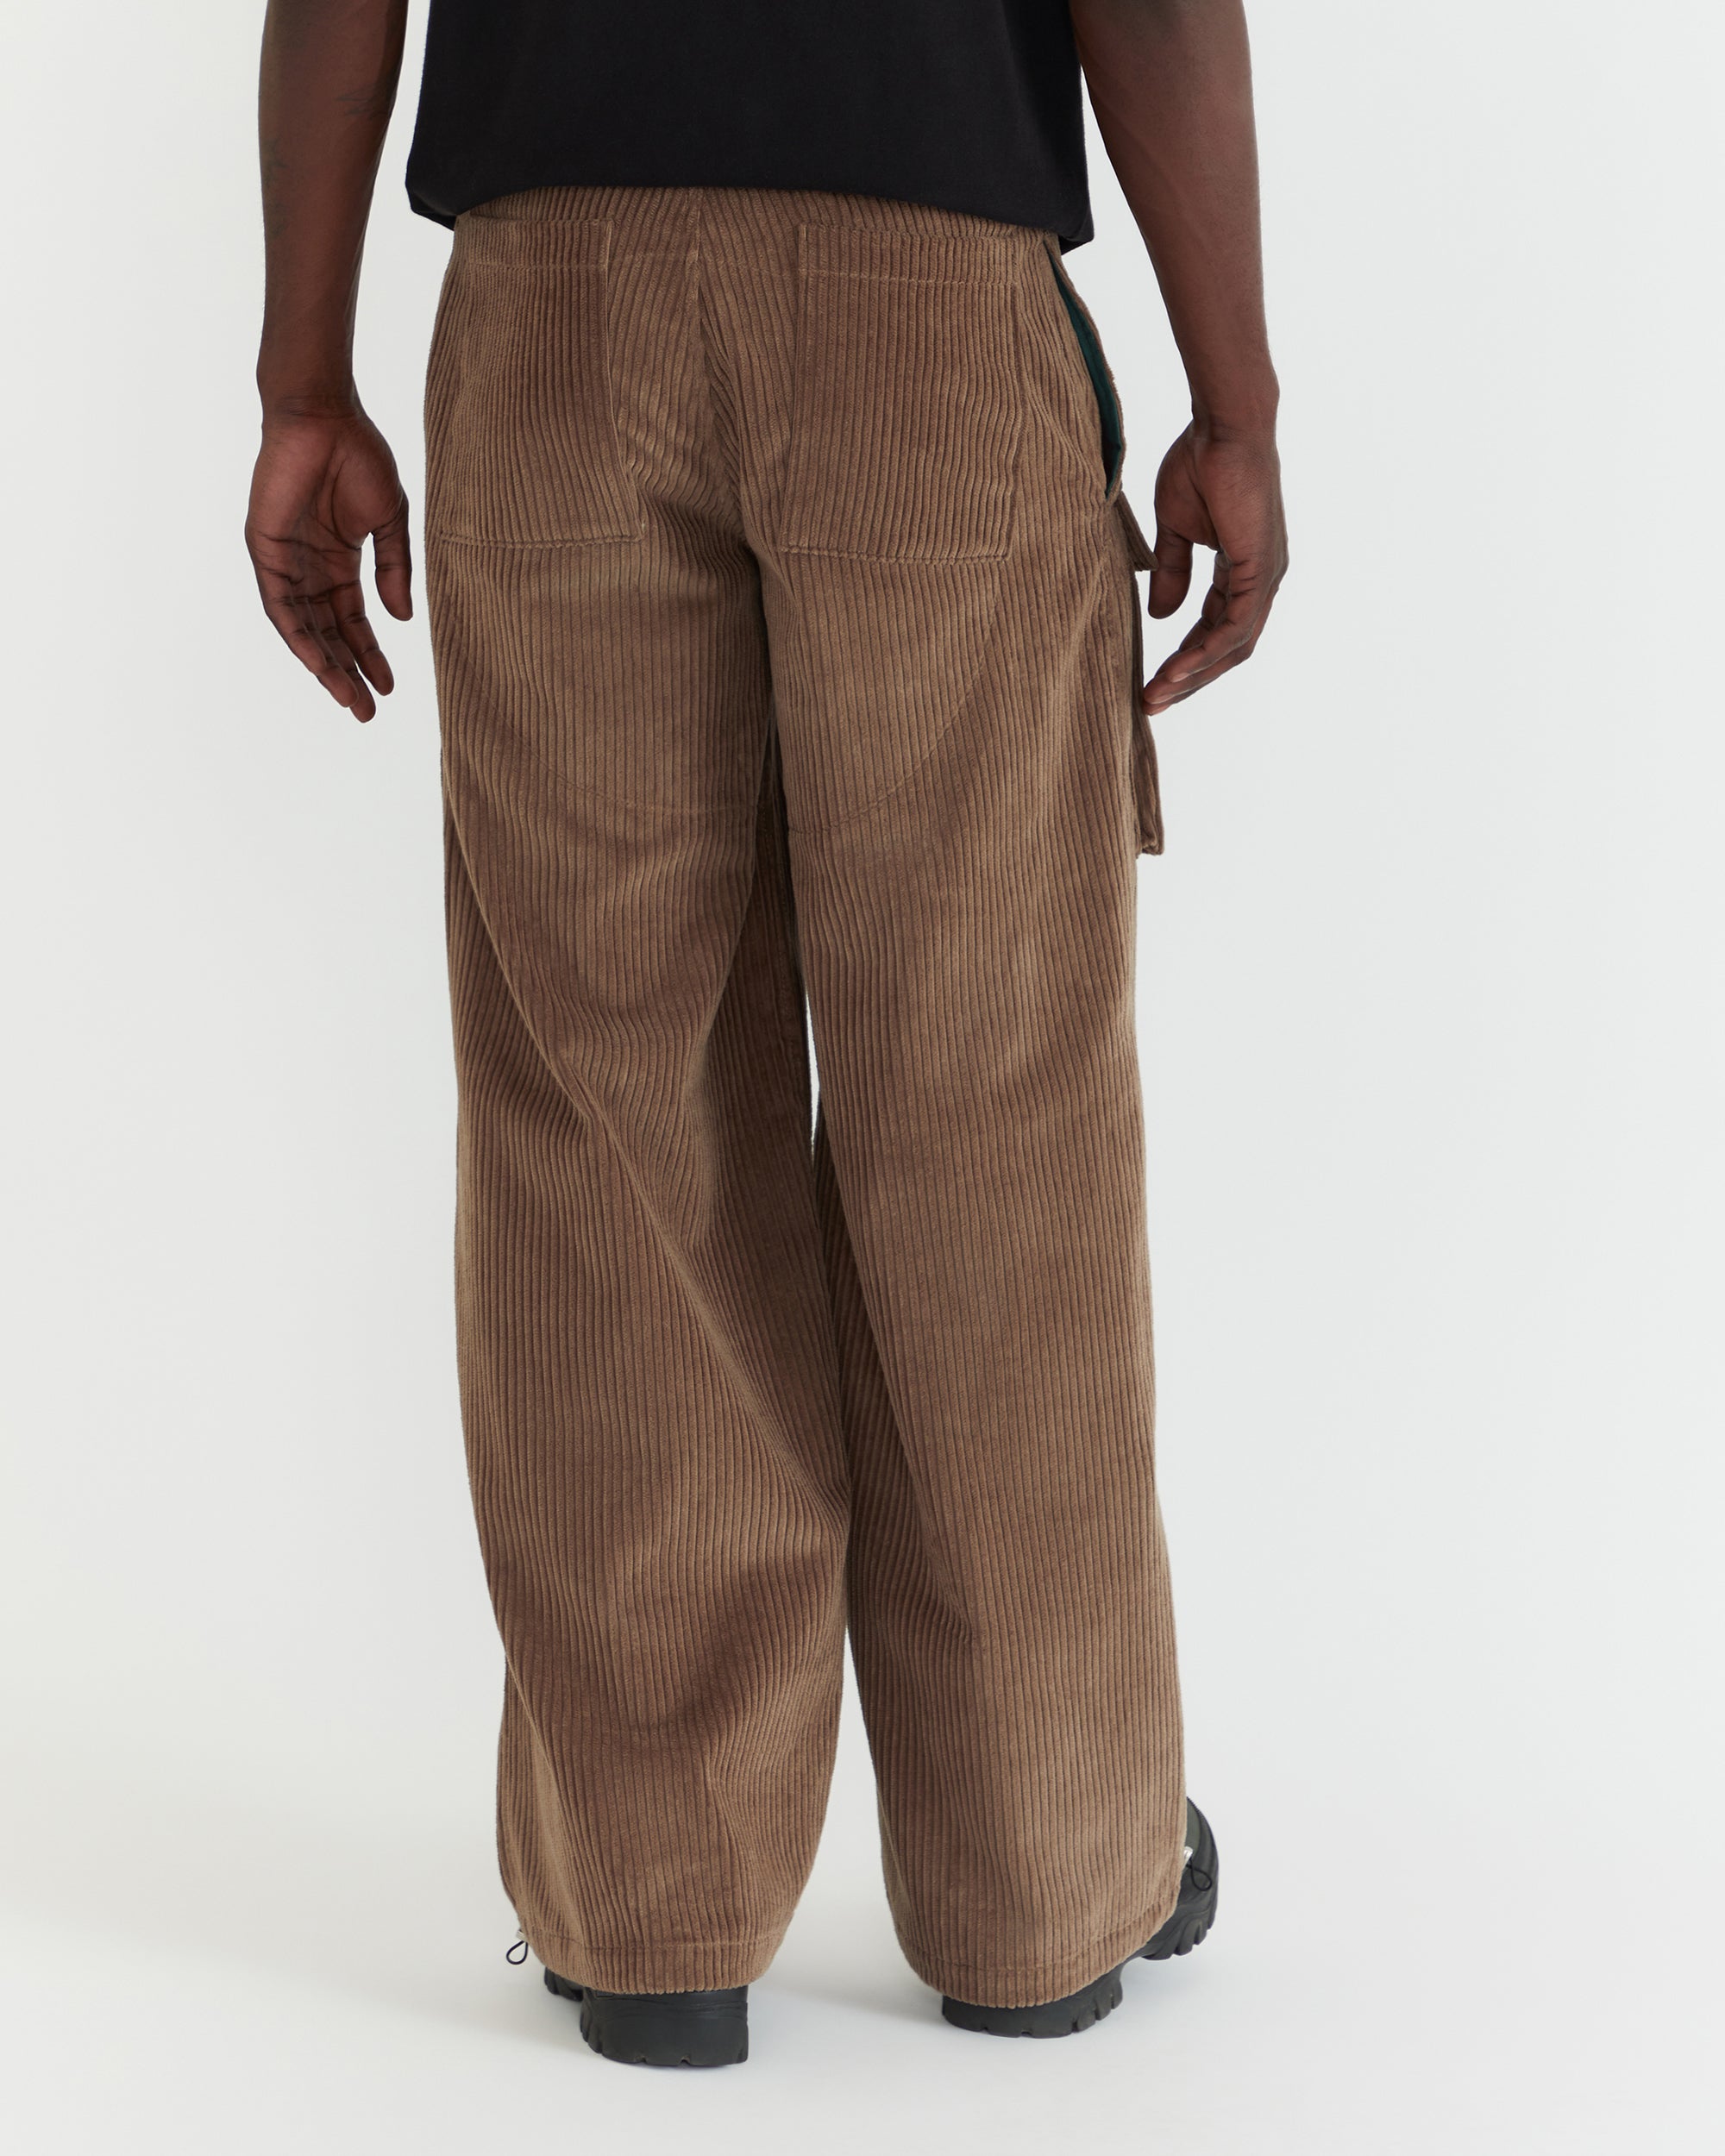 MEN - Corduroy Front Pocket Pant - Brown - 3